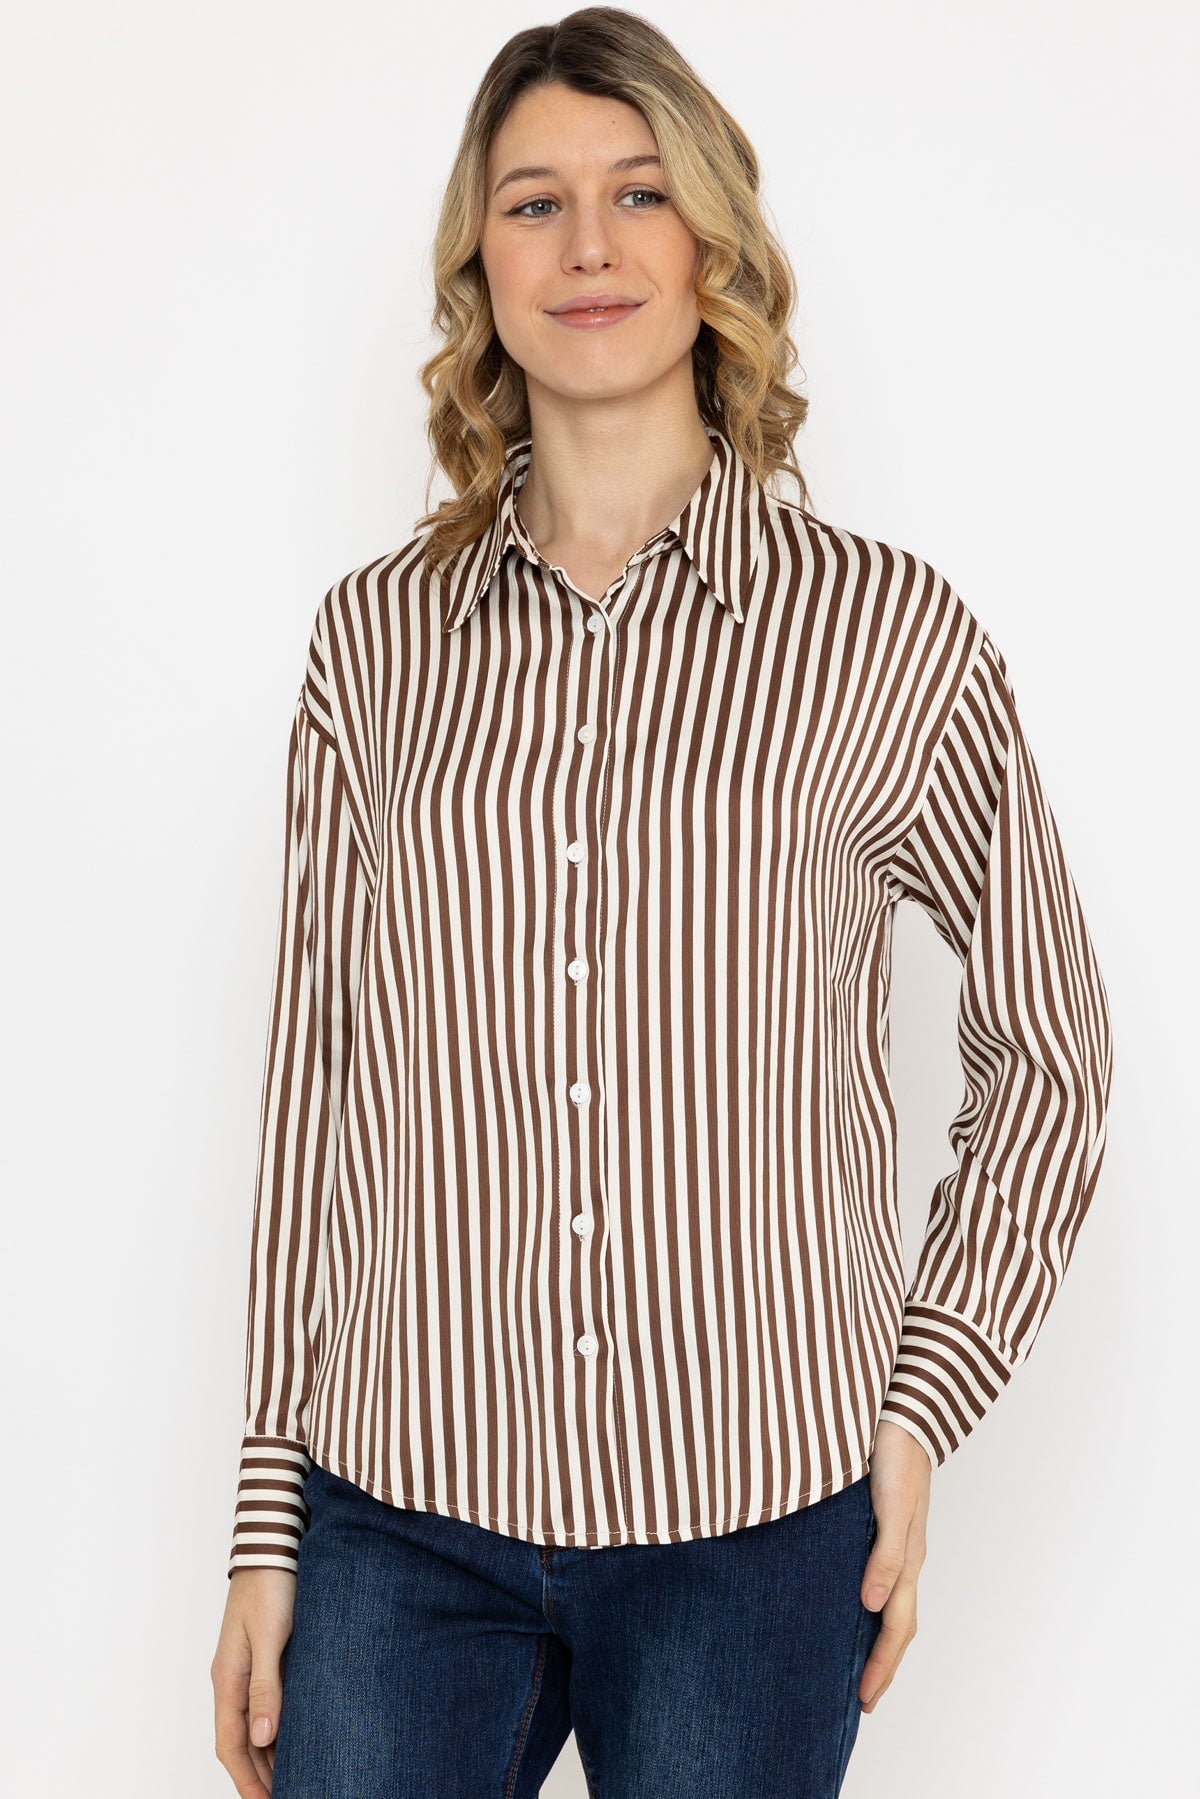 Satin Stripe Shirt in Brown